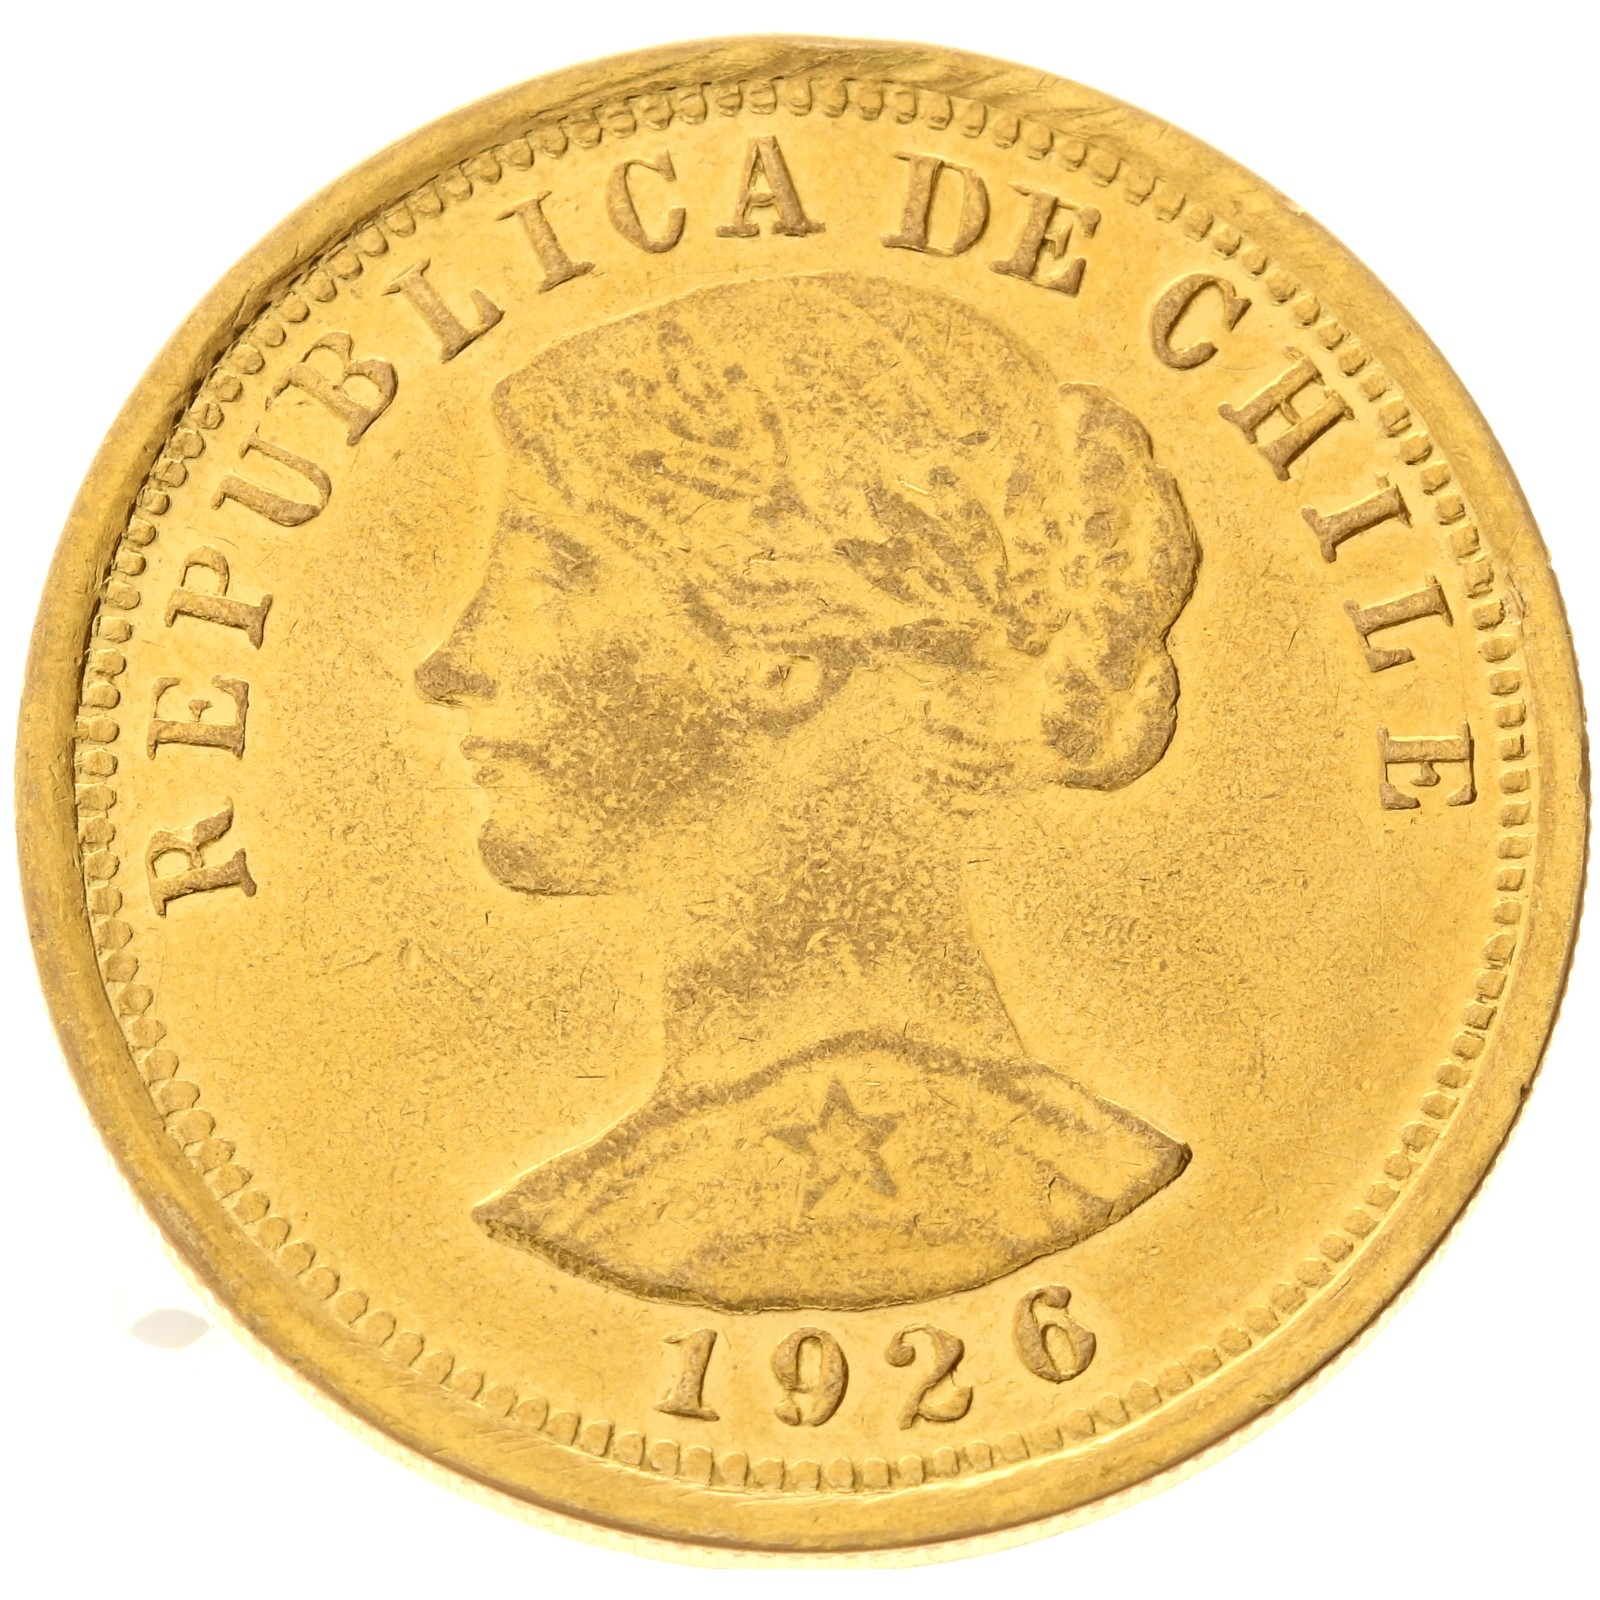 Chile - 100 pesos - 1926